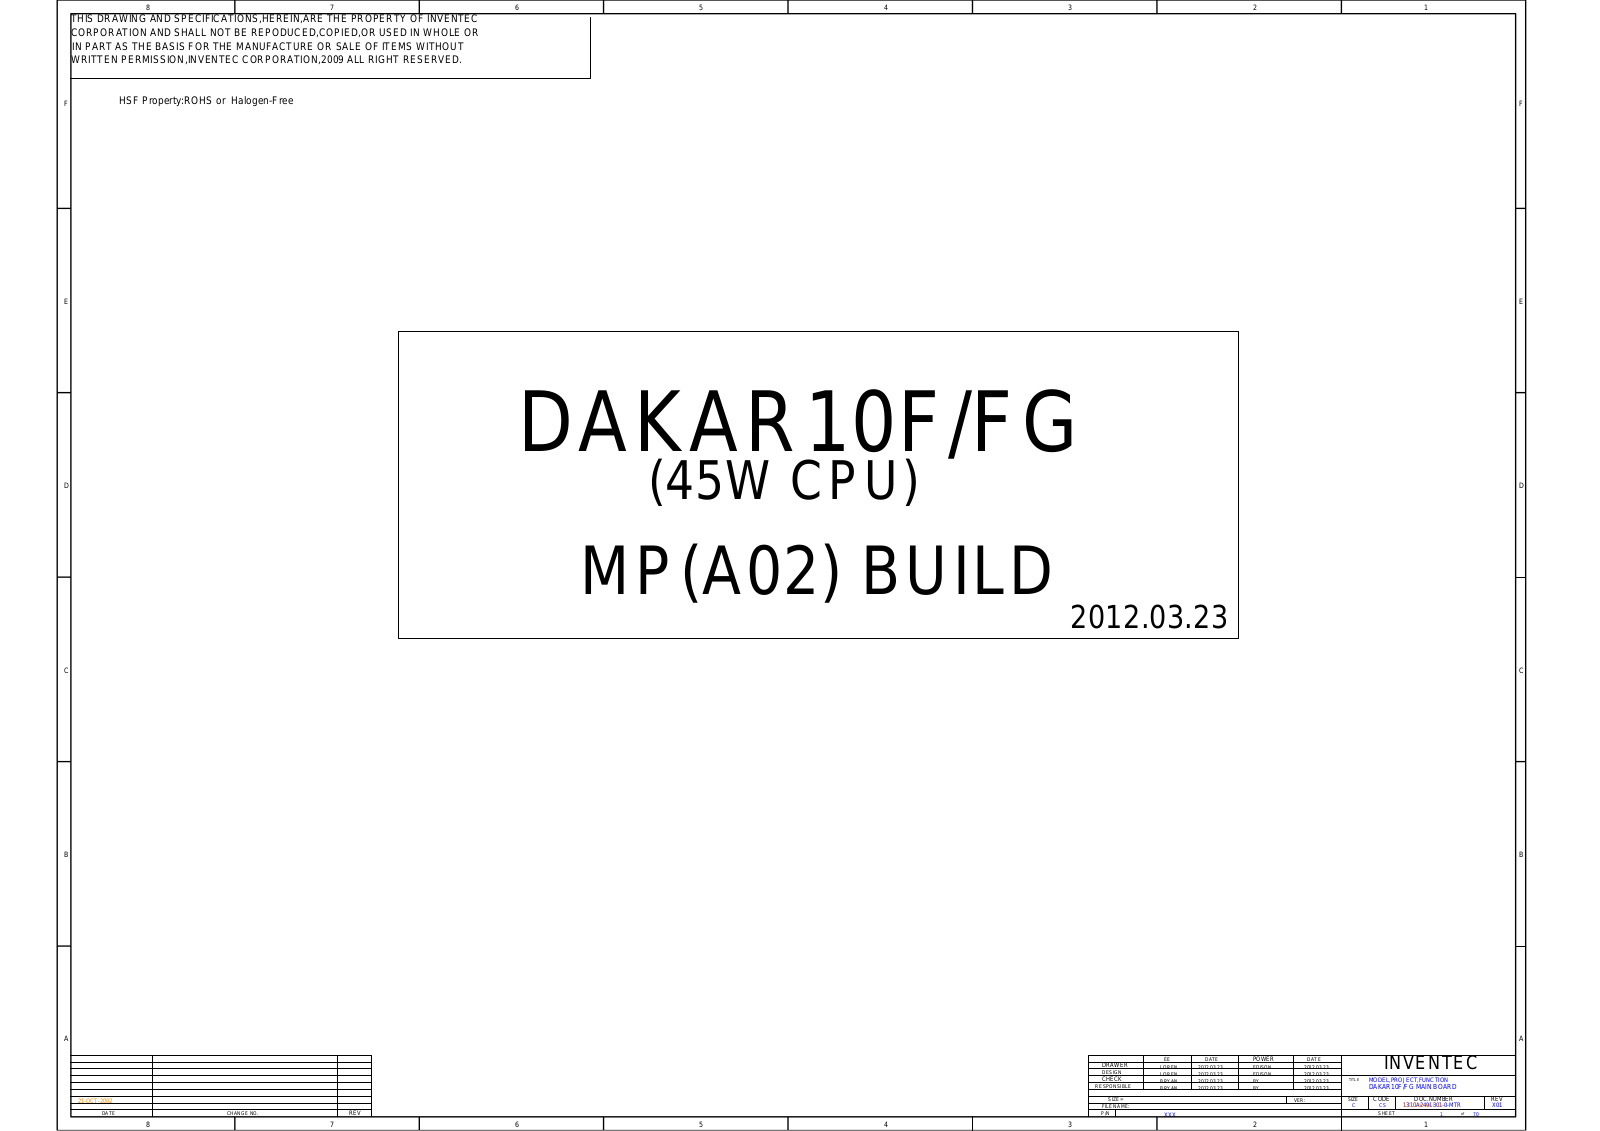 Toshiba DAKAR10F/FG (45W CPU), MP(A02) BUILD Schematic